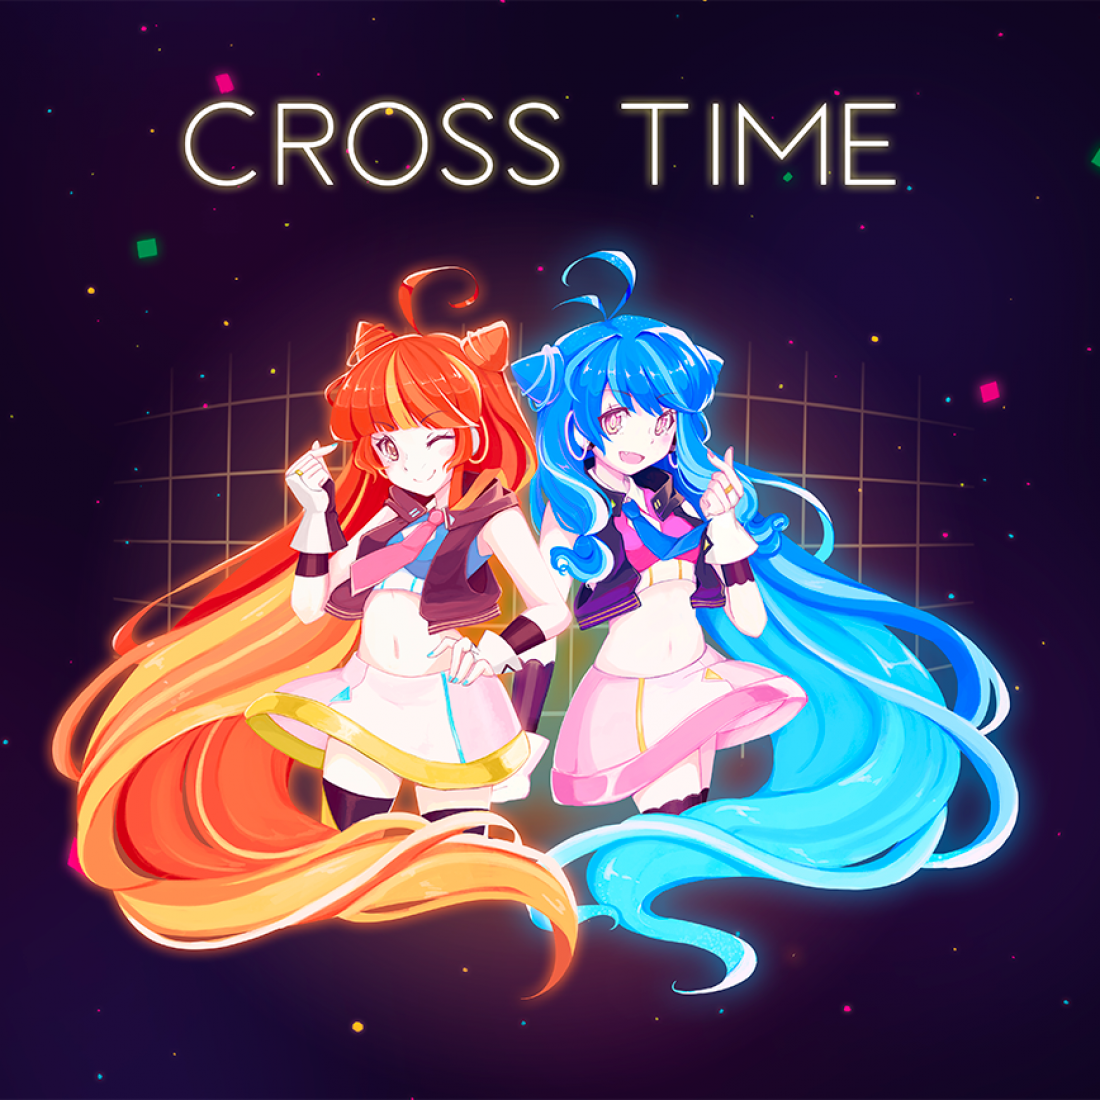 Cross time